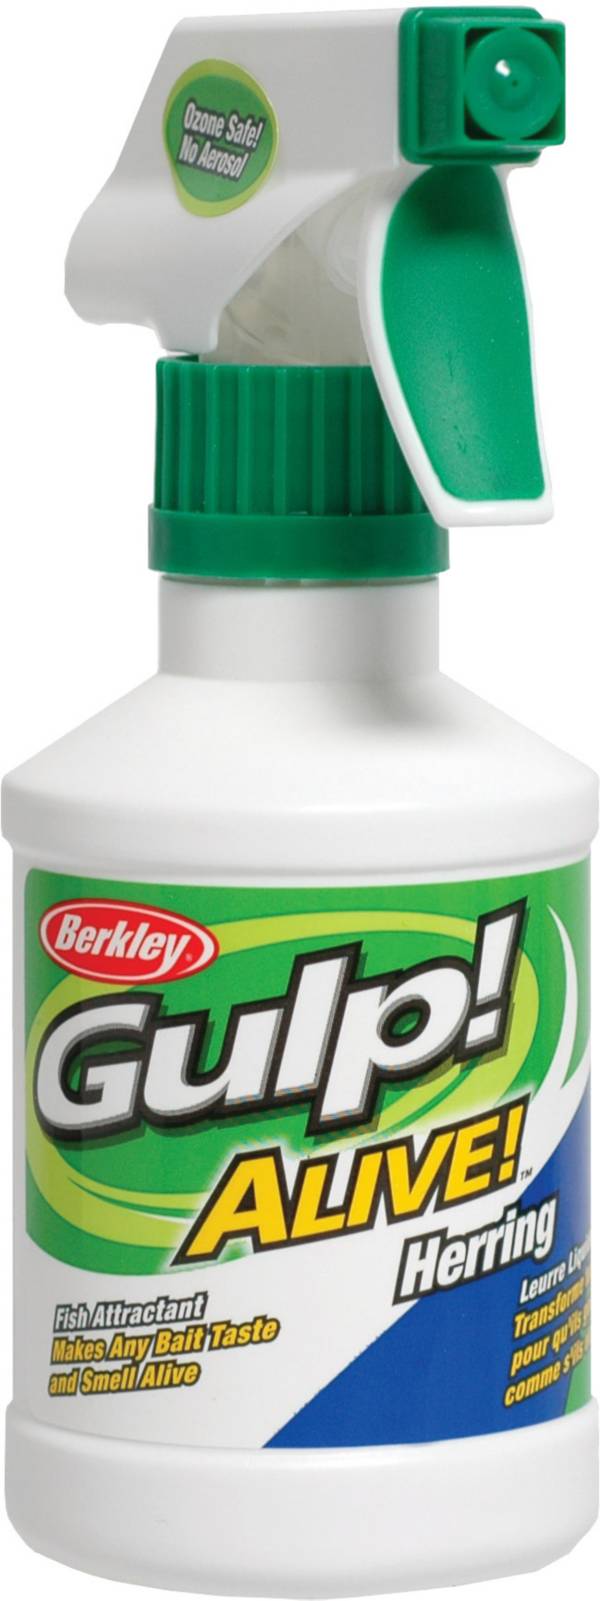 Berkley Gulp! Alive! Fish Attractant Spray product image